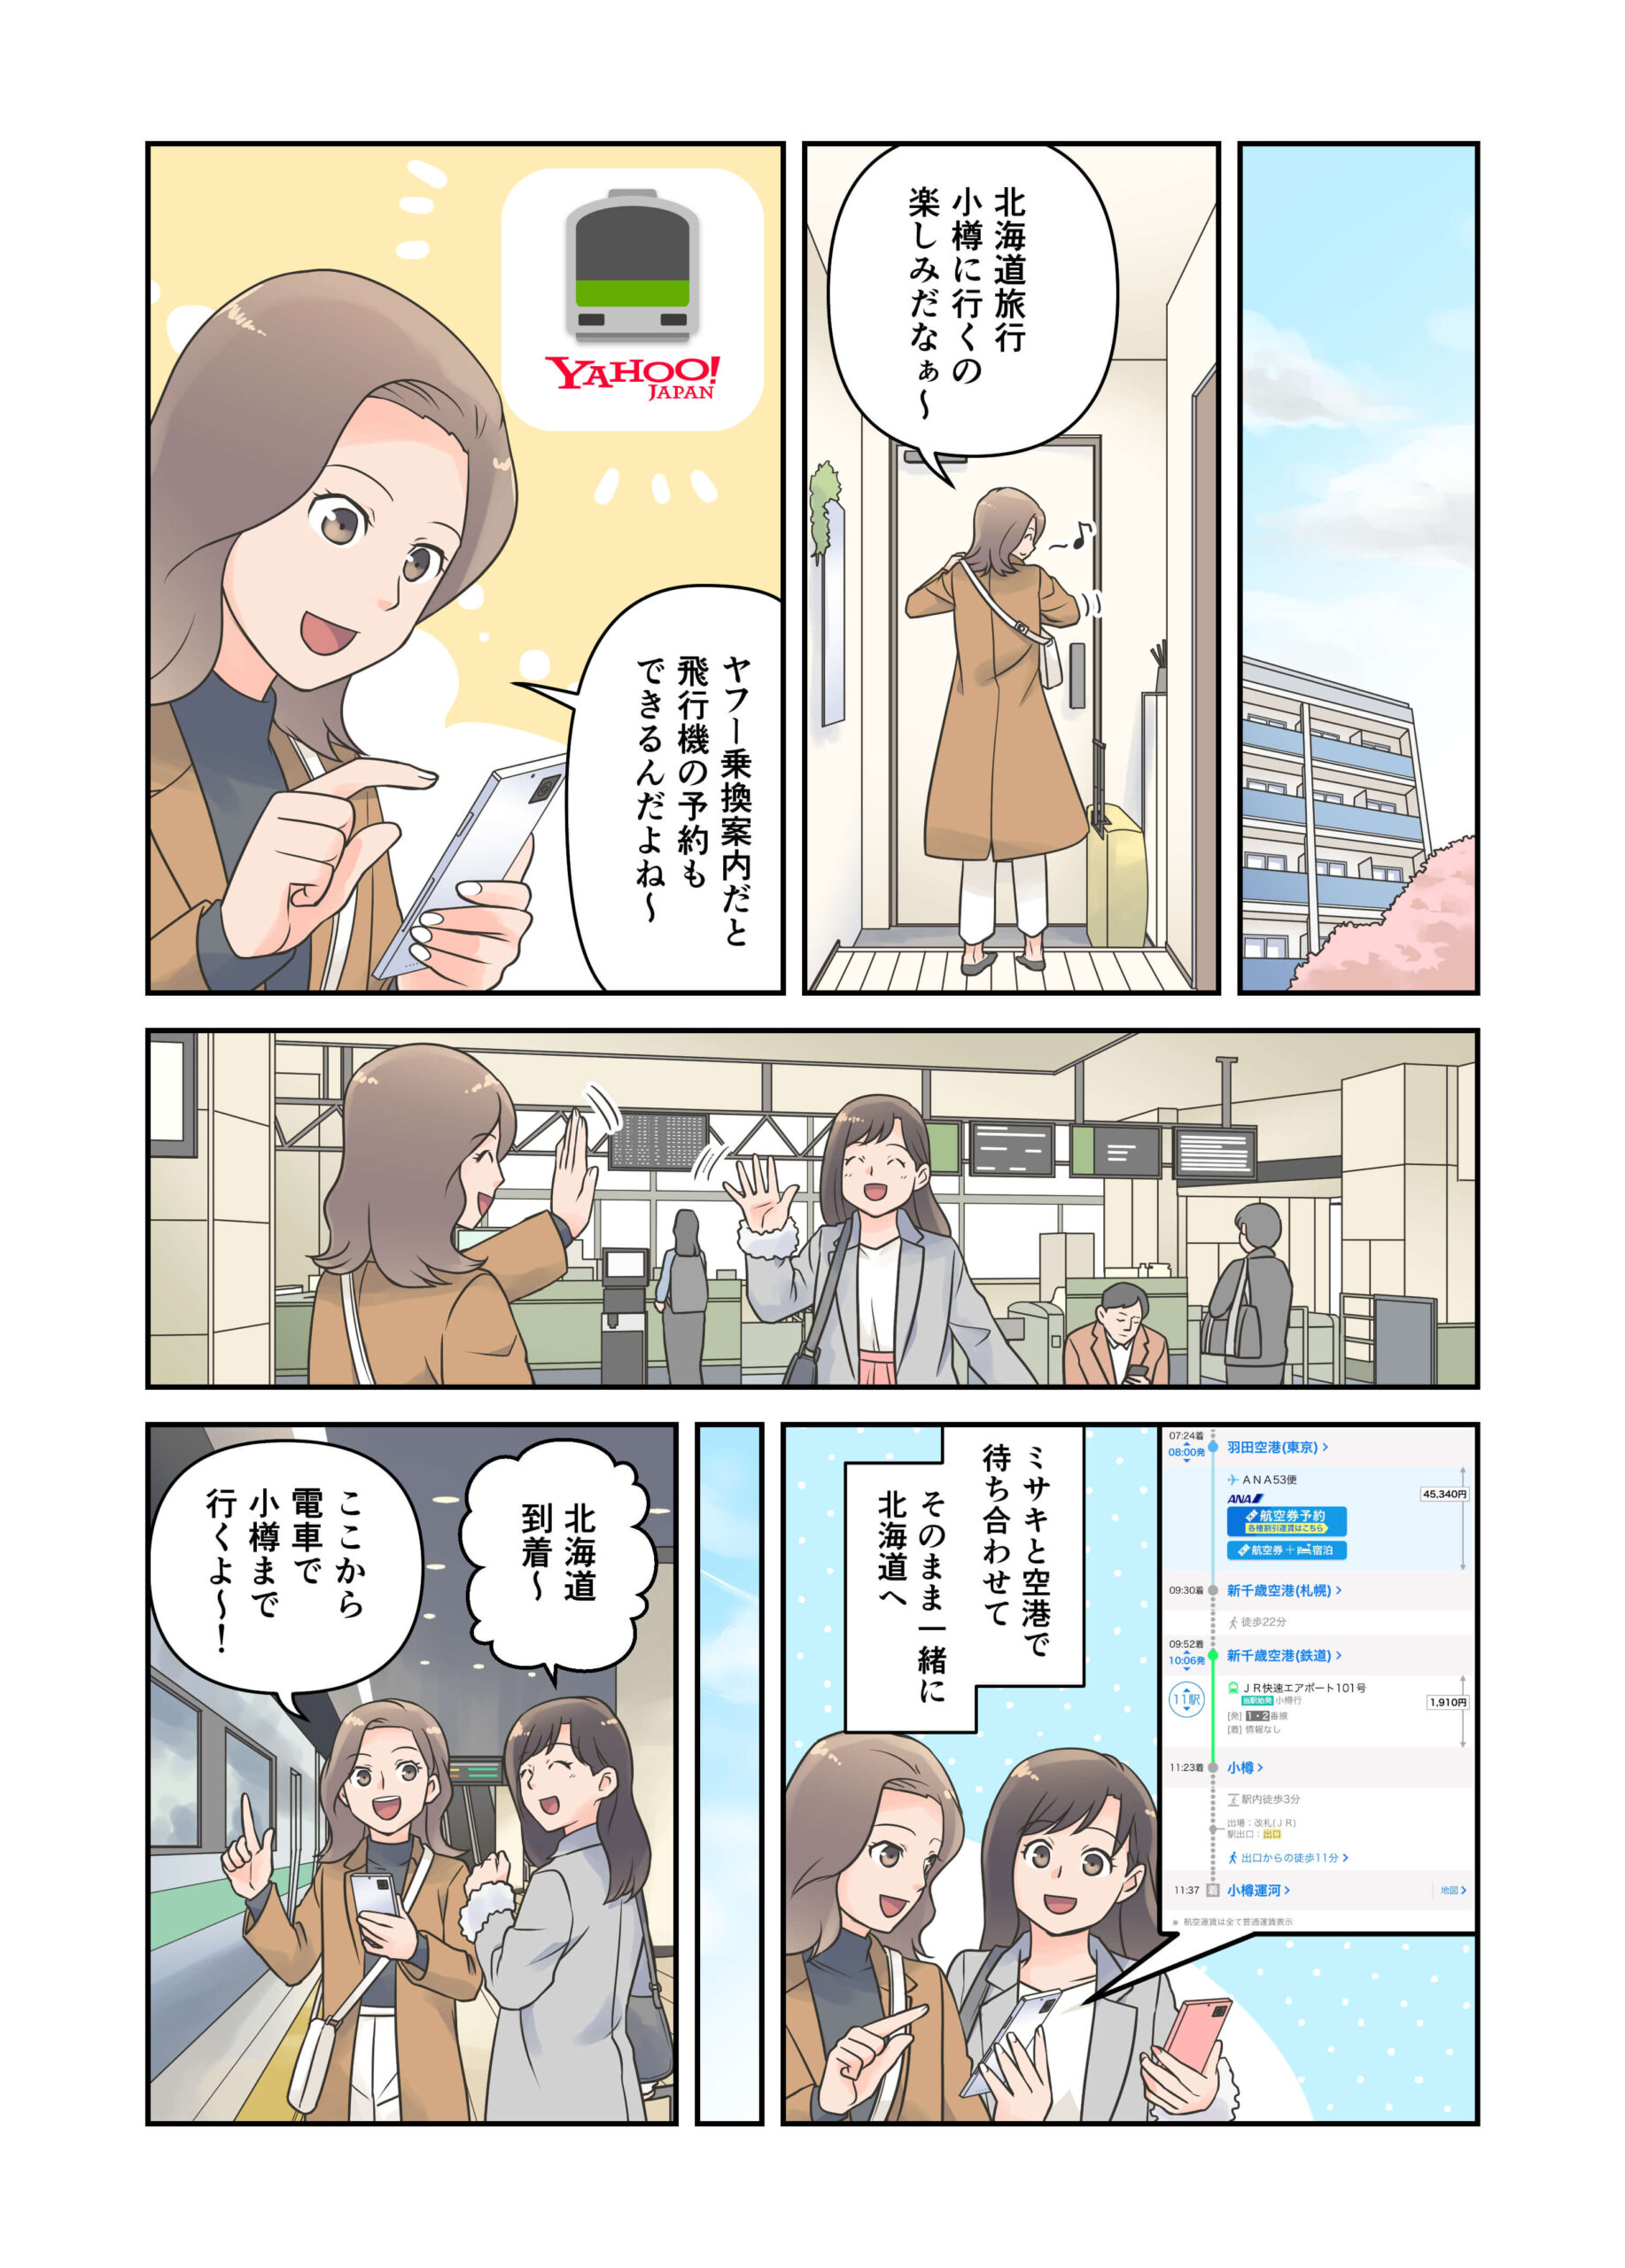 Yahoo! JAPAN公式SNSアカウント投稿用漫画　ヤフー乗換案内